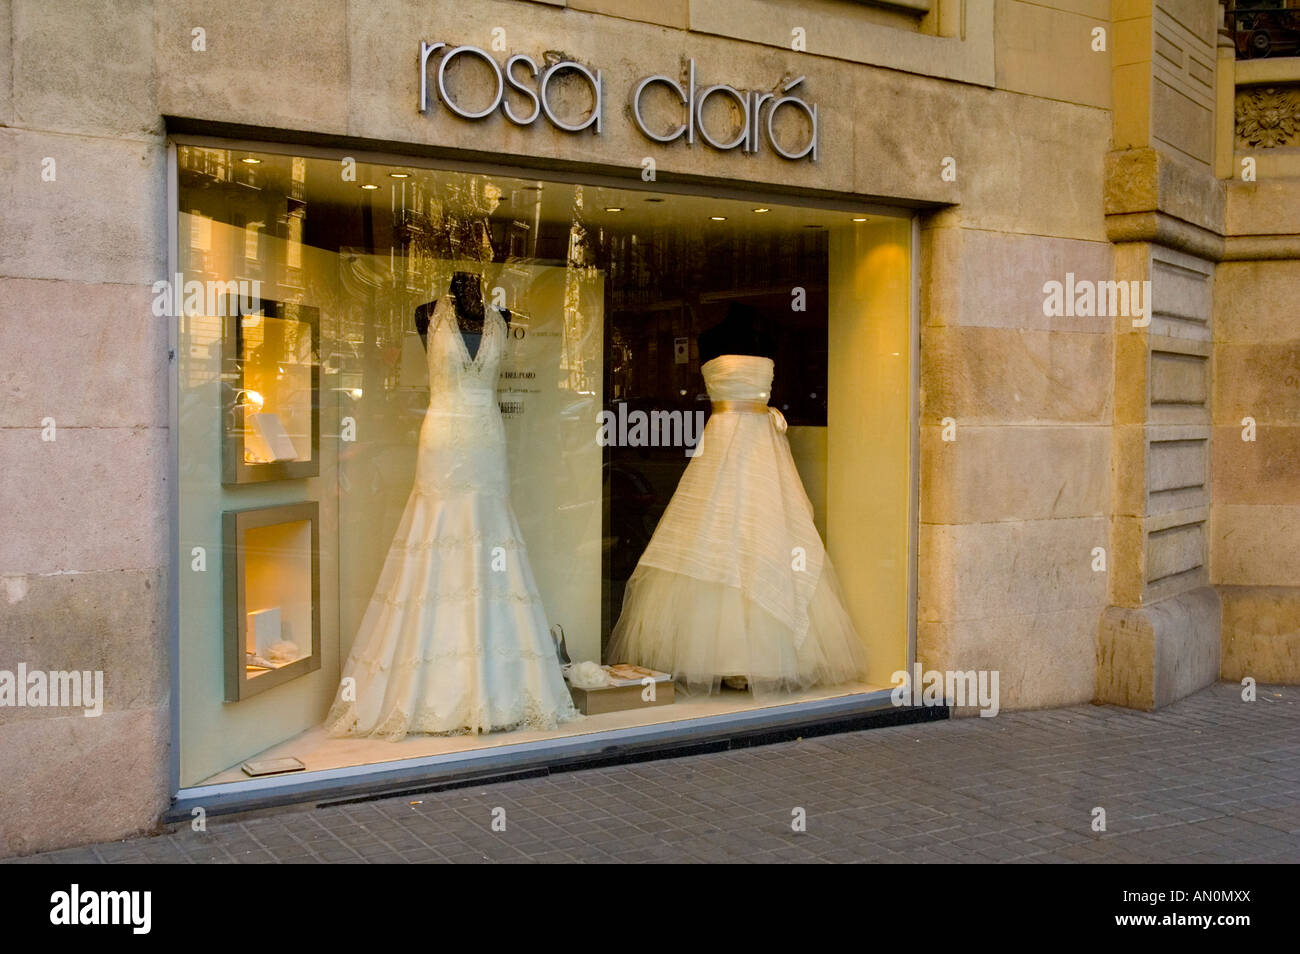 Rosa Clara dress shop window Barcelona Spain EU Stock Photo - Alamy